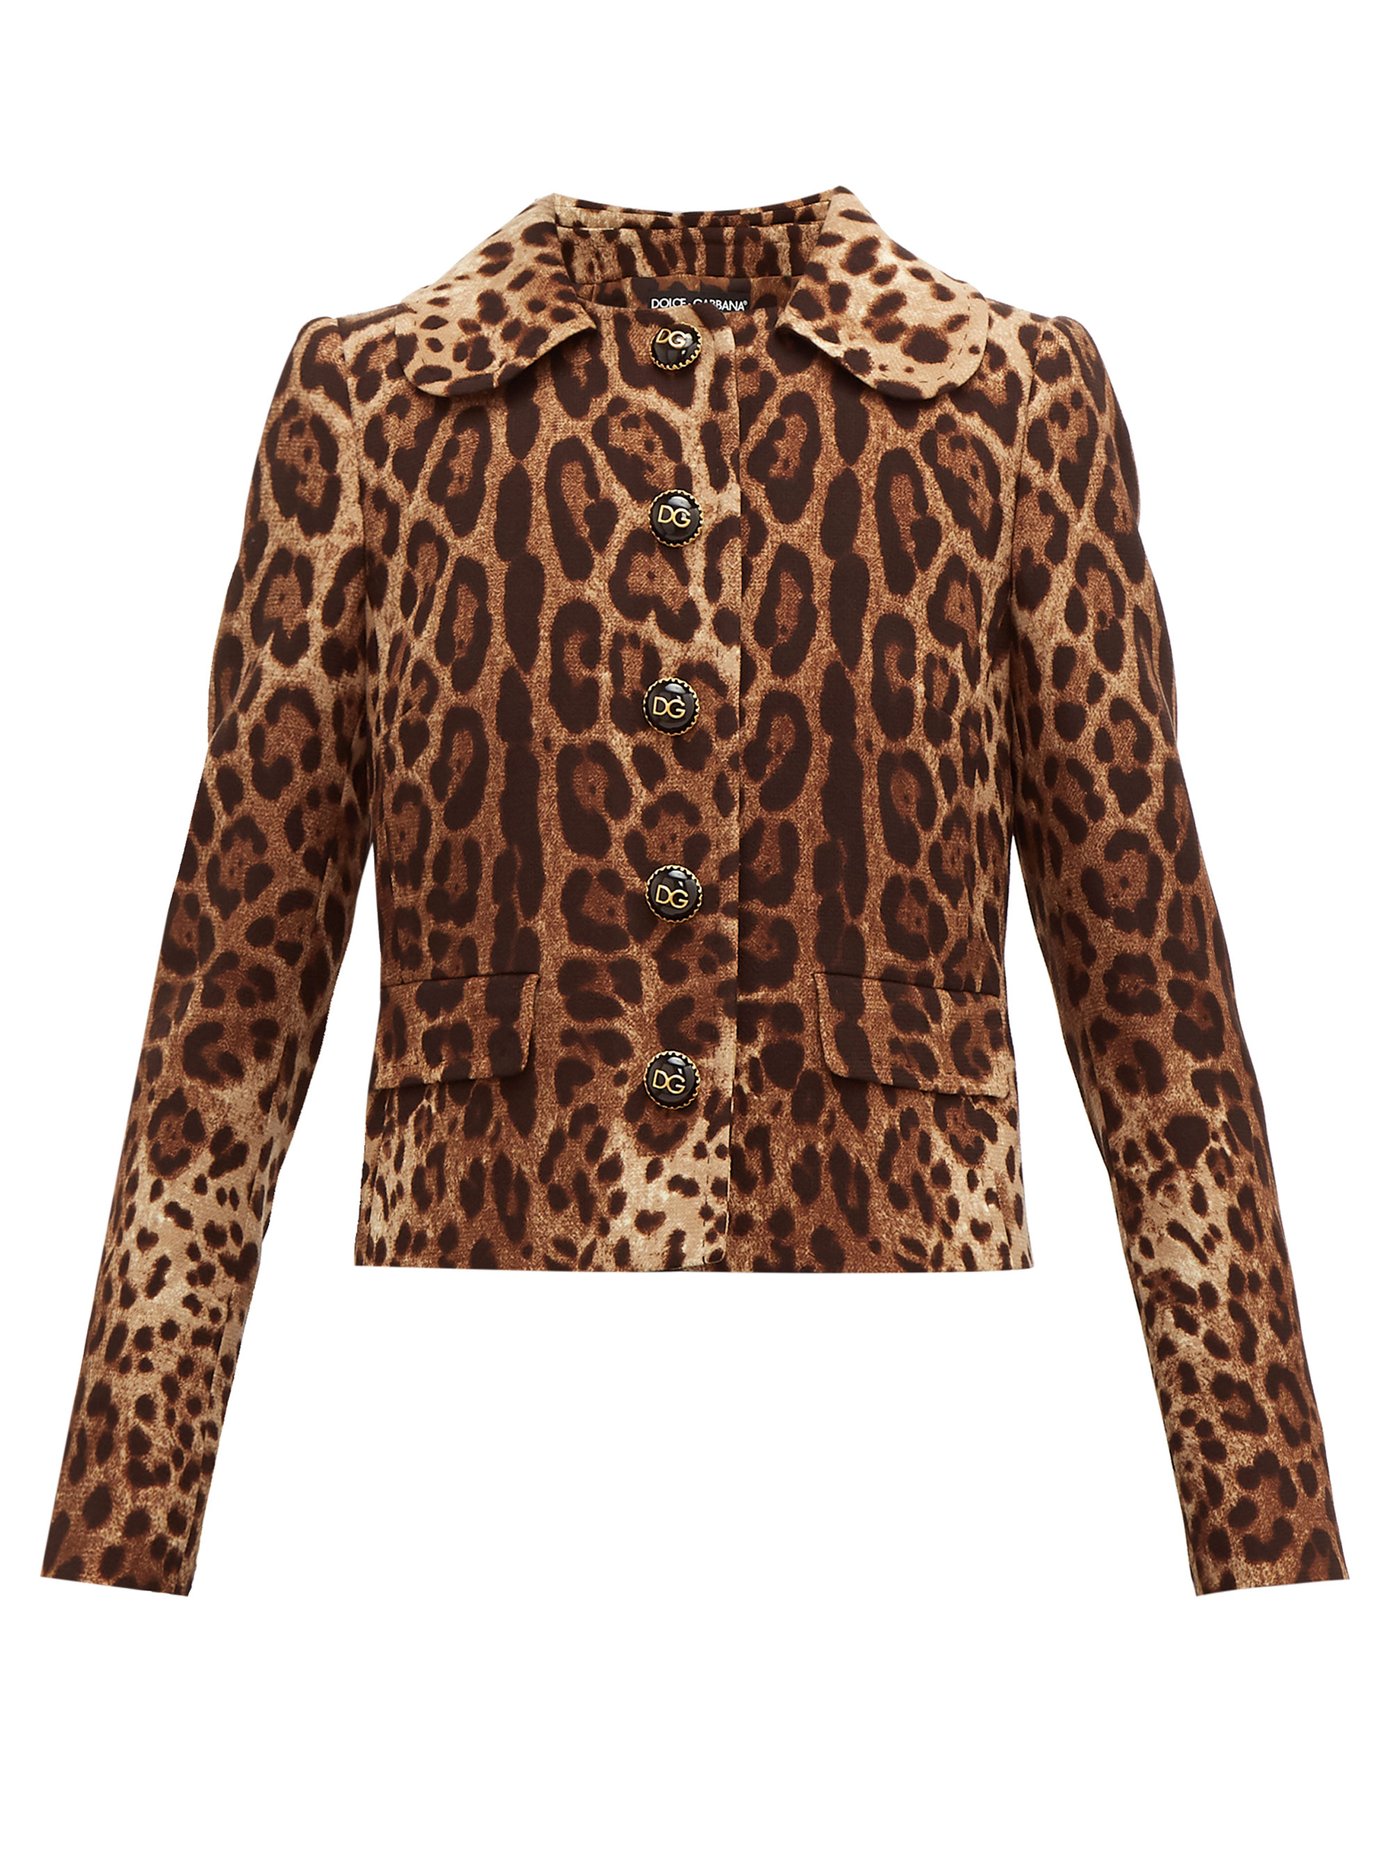 dolce and gabbana leopard jacket